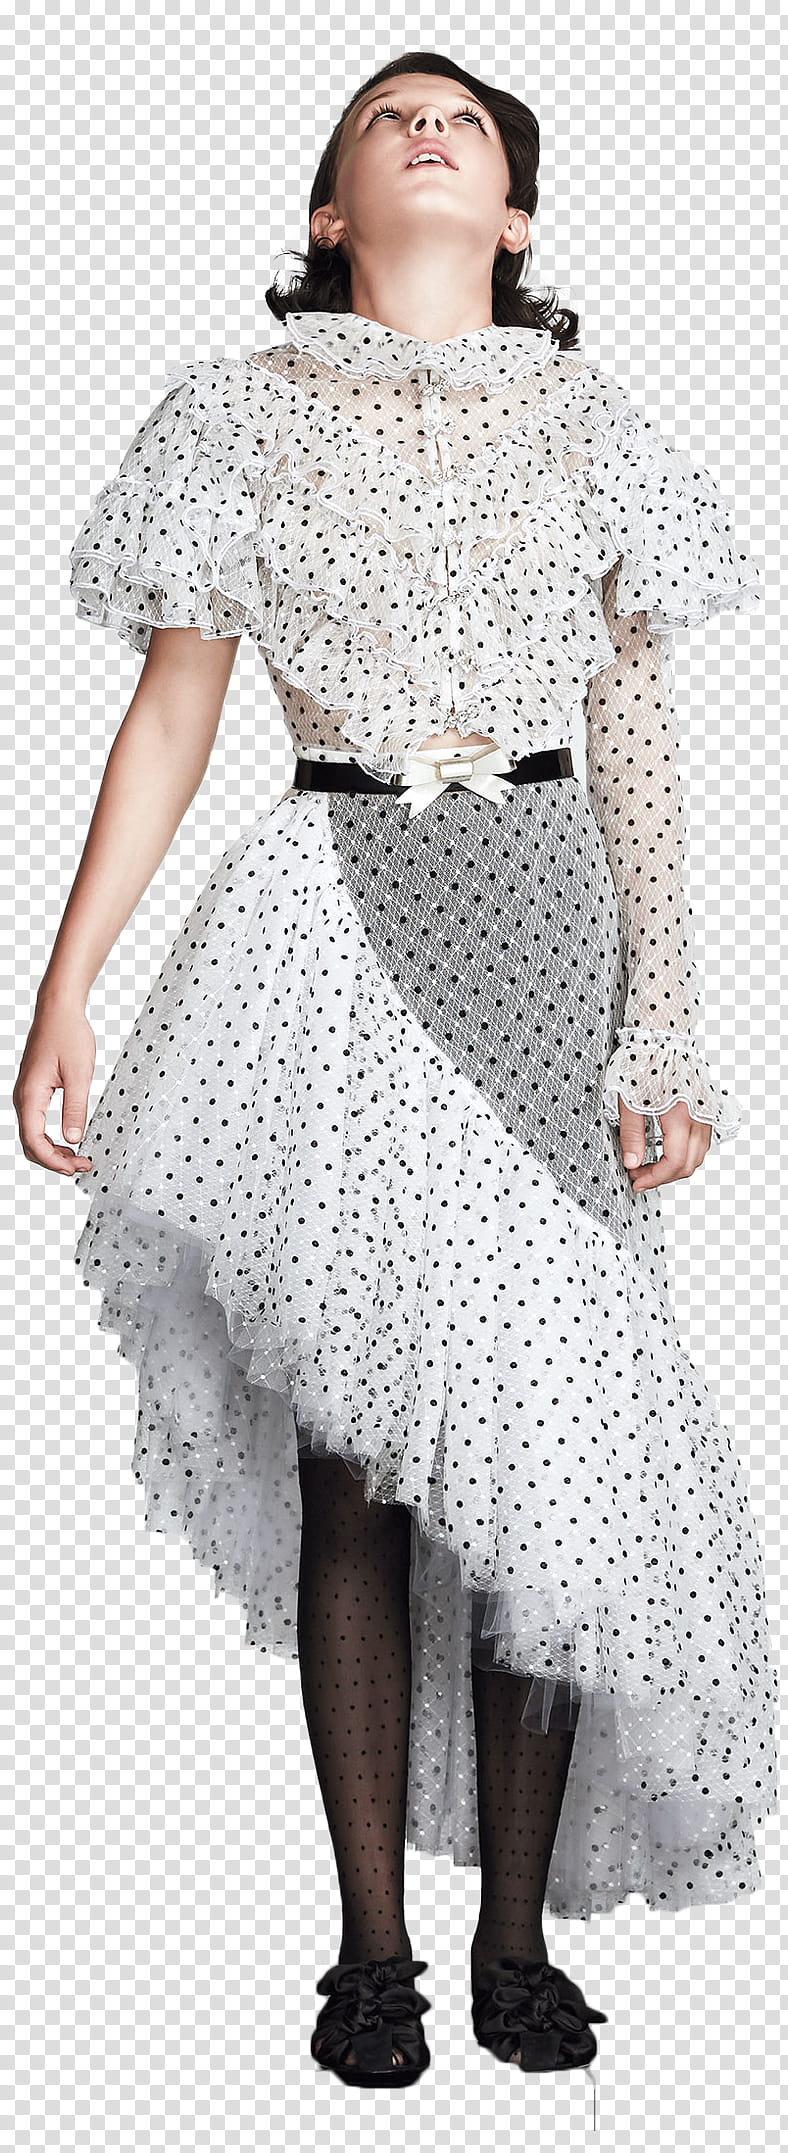 Millie Bob, white and black polka dot sleeveless dress transparent background PNG clipart